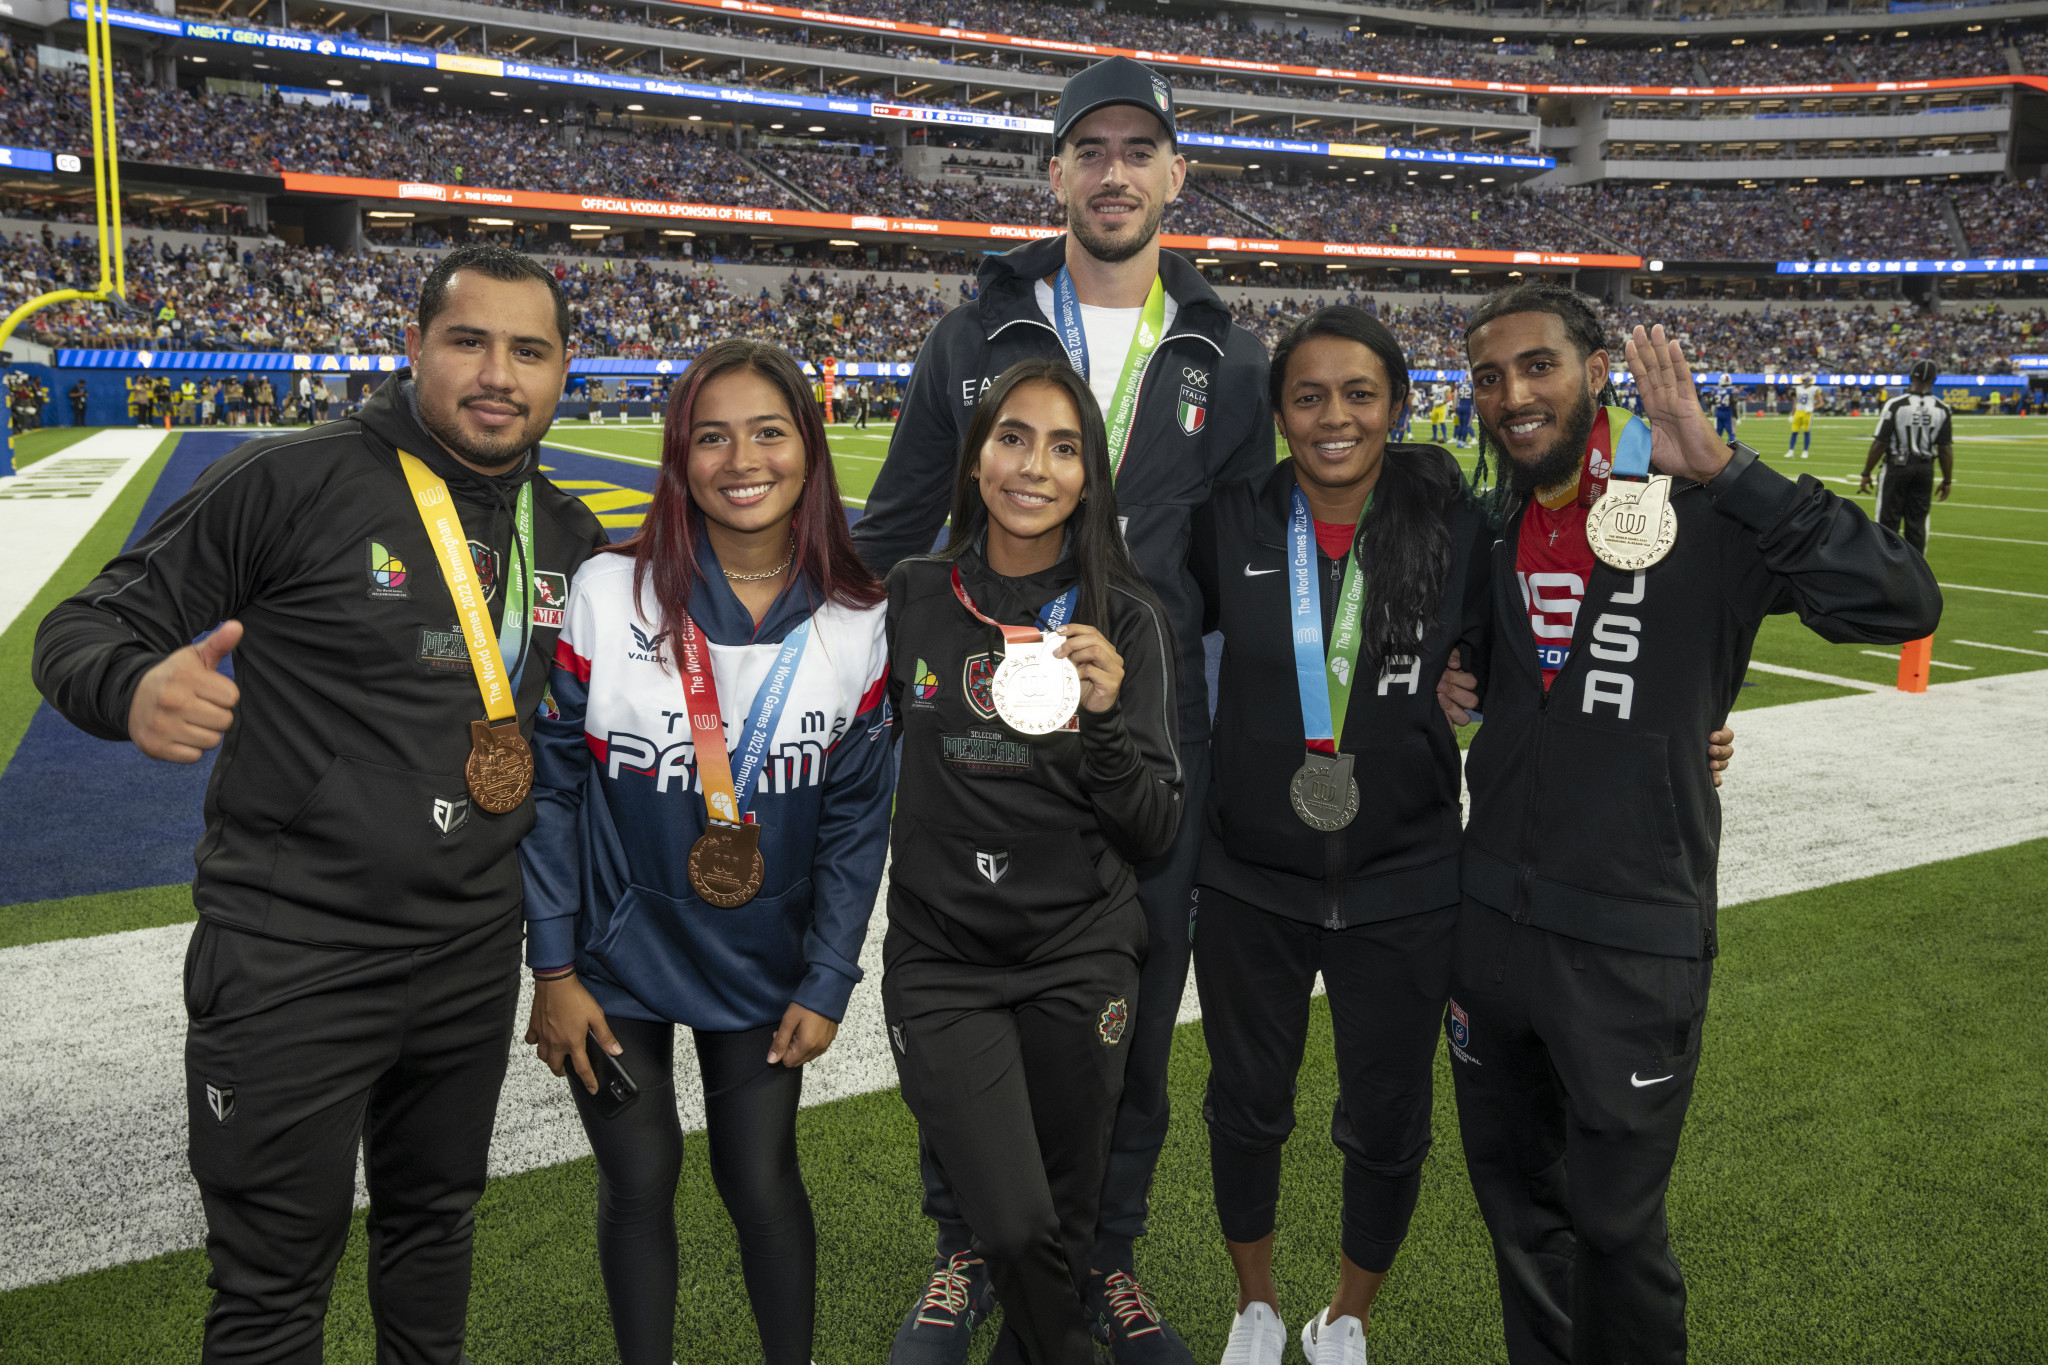 World Games flag football medallists honoured at season-opening NFL game